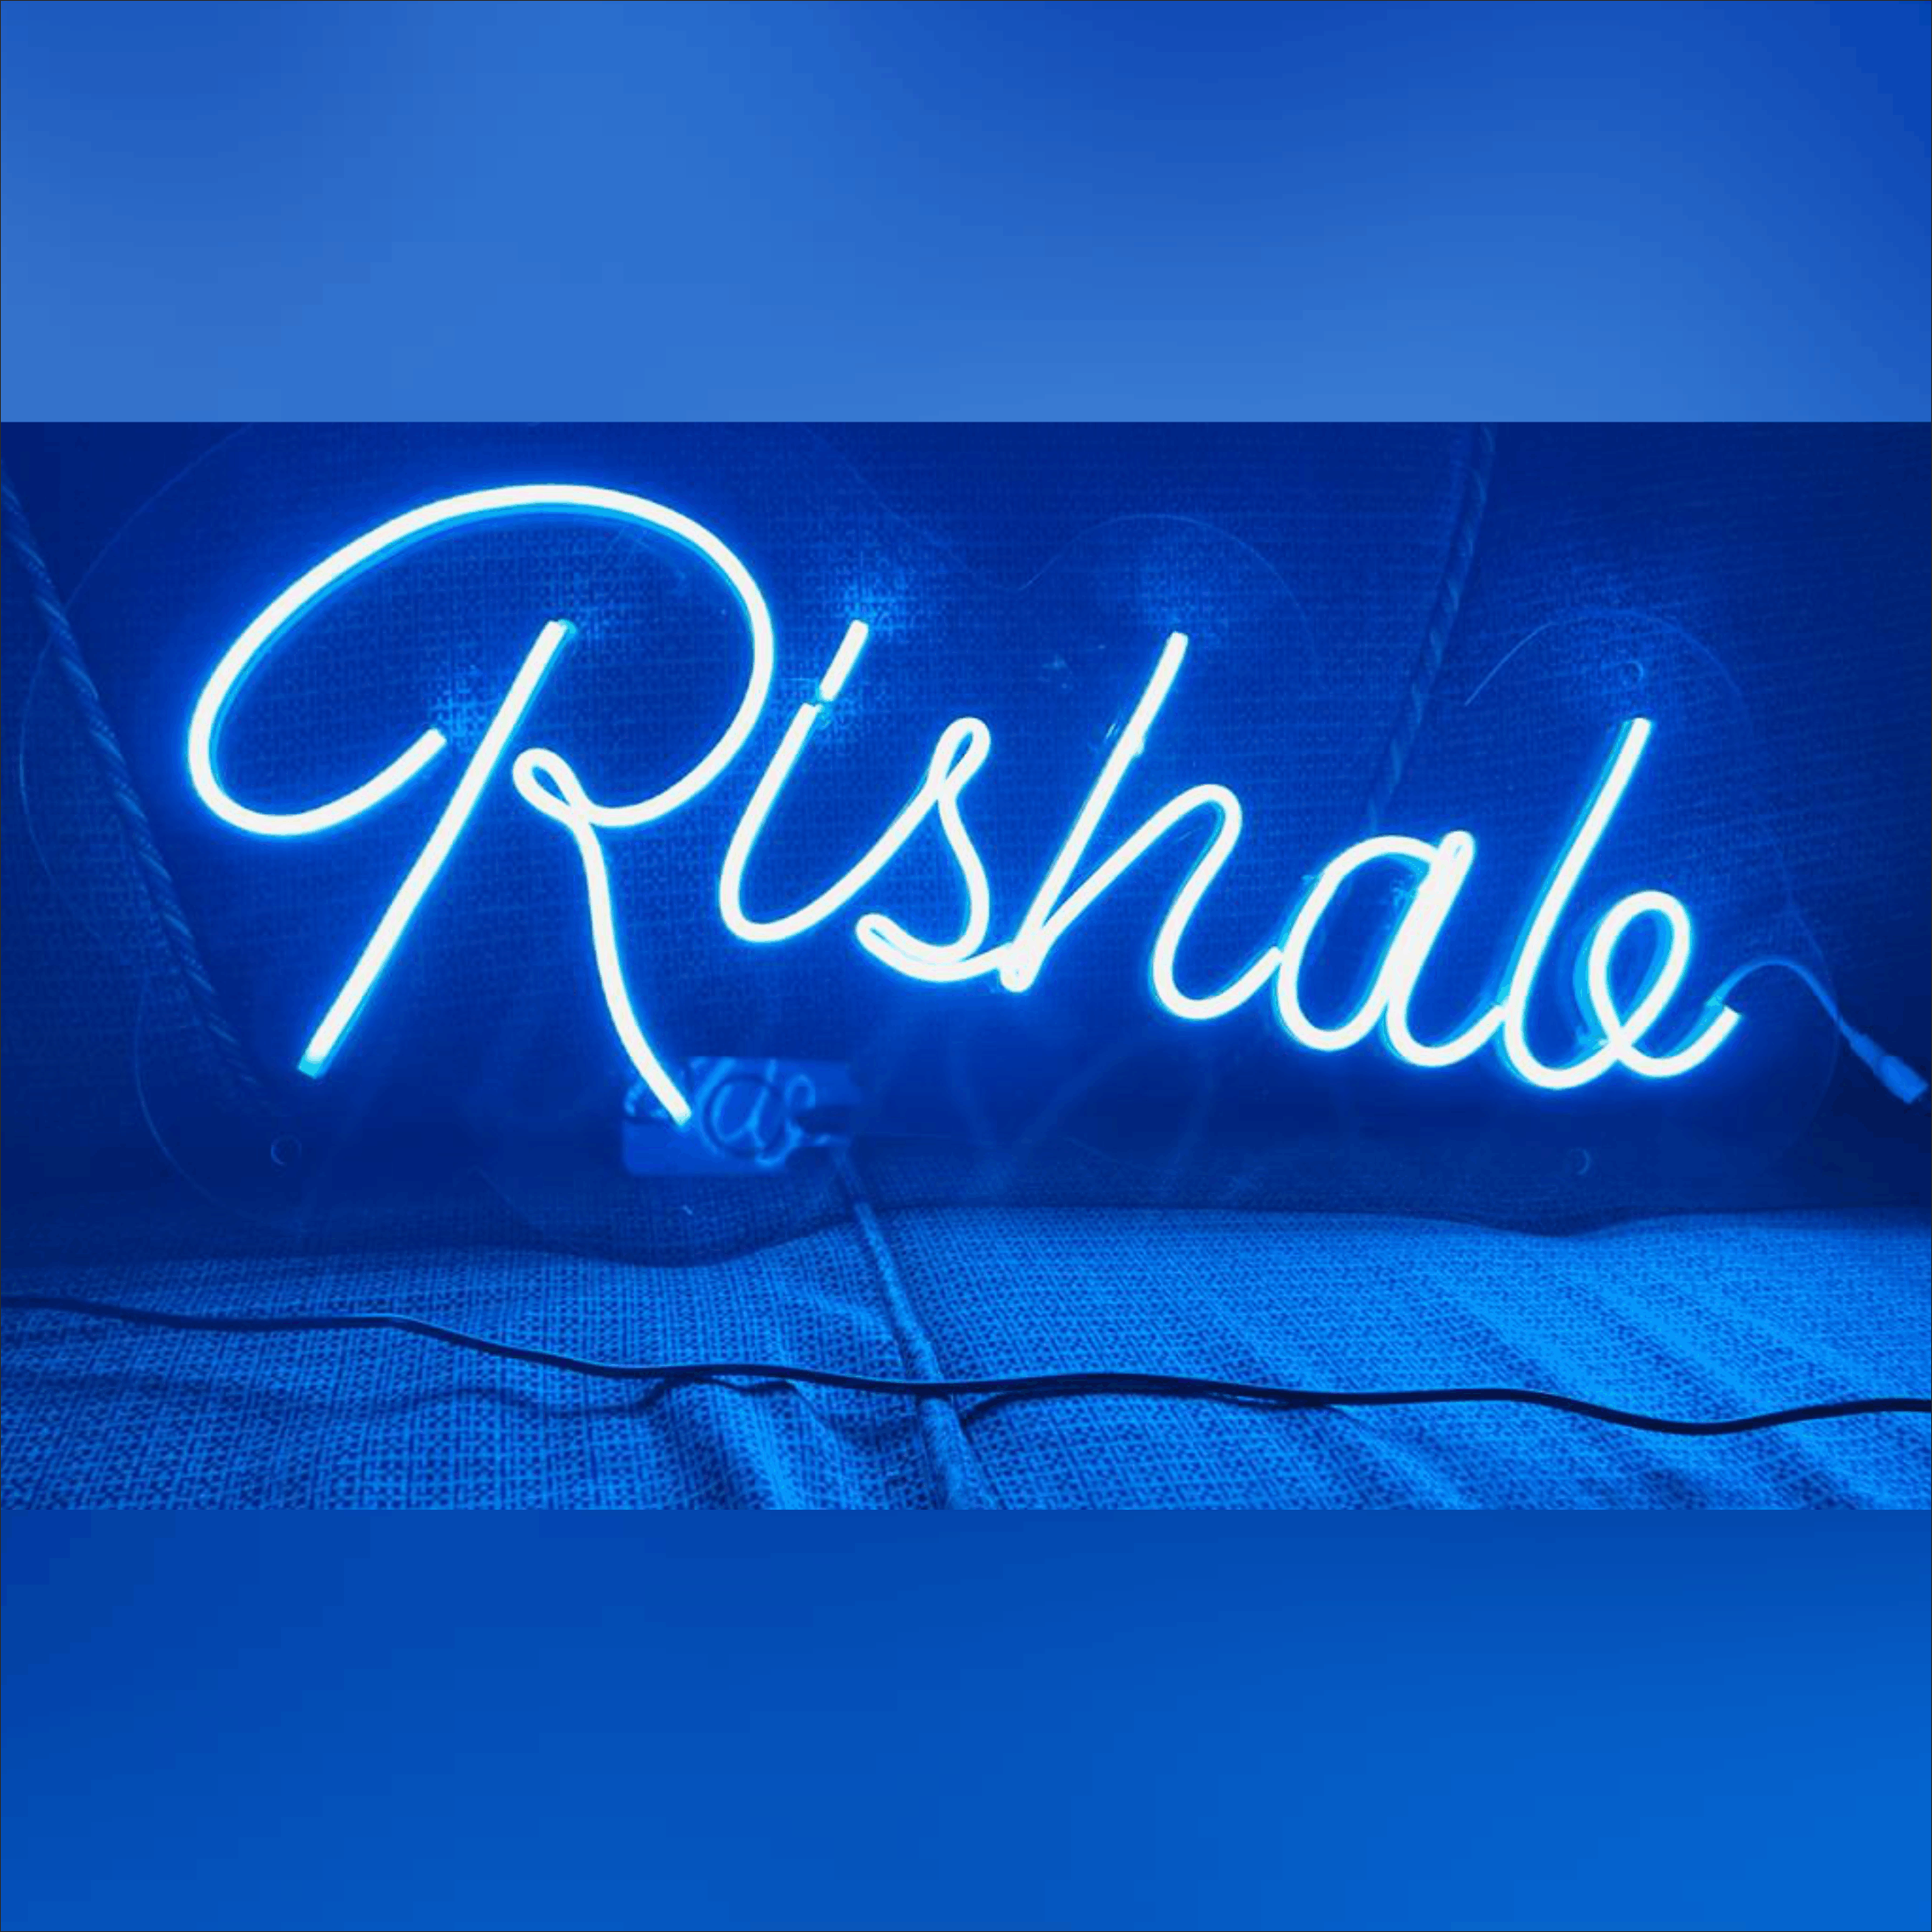 Rishab name neon sign